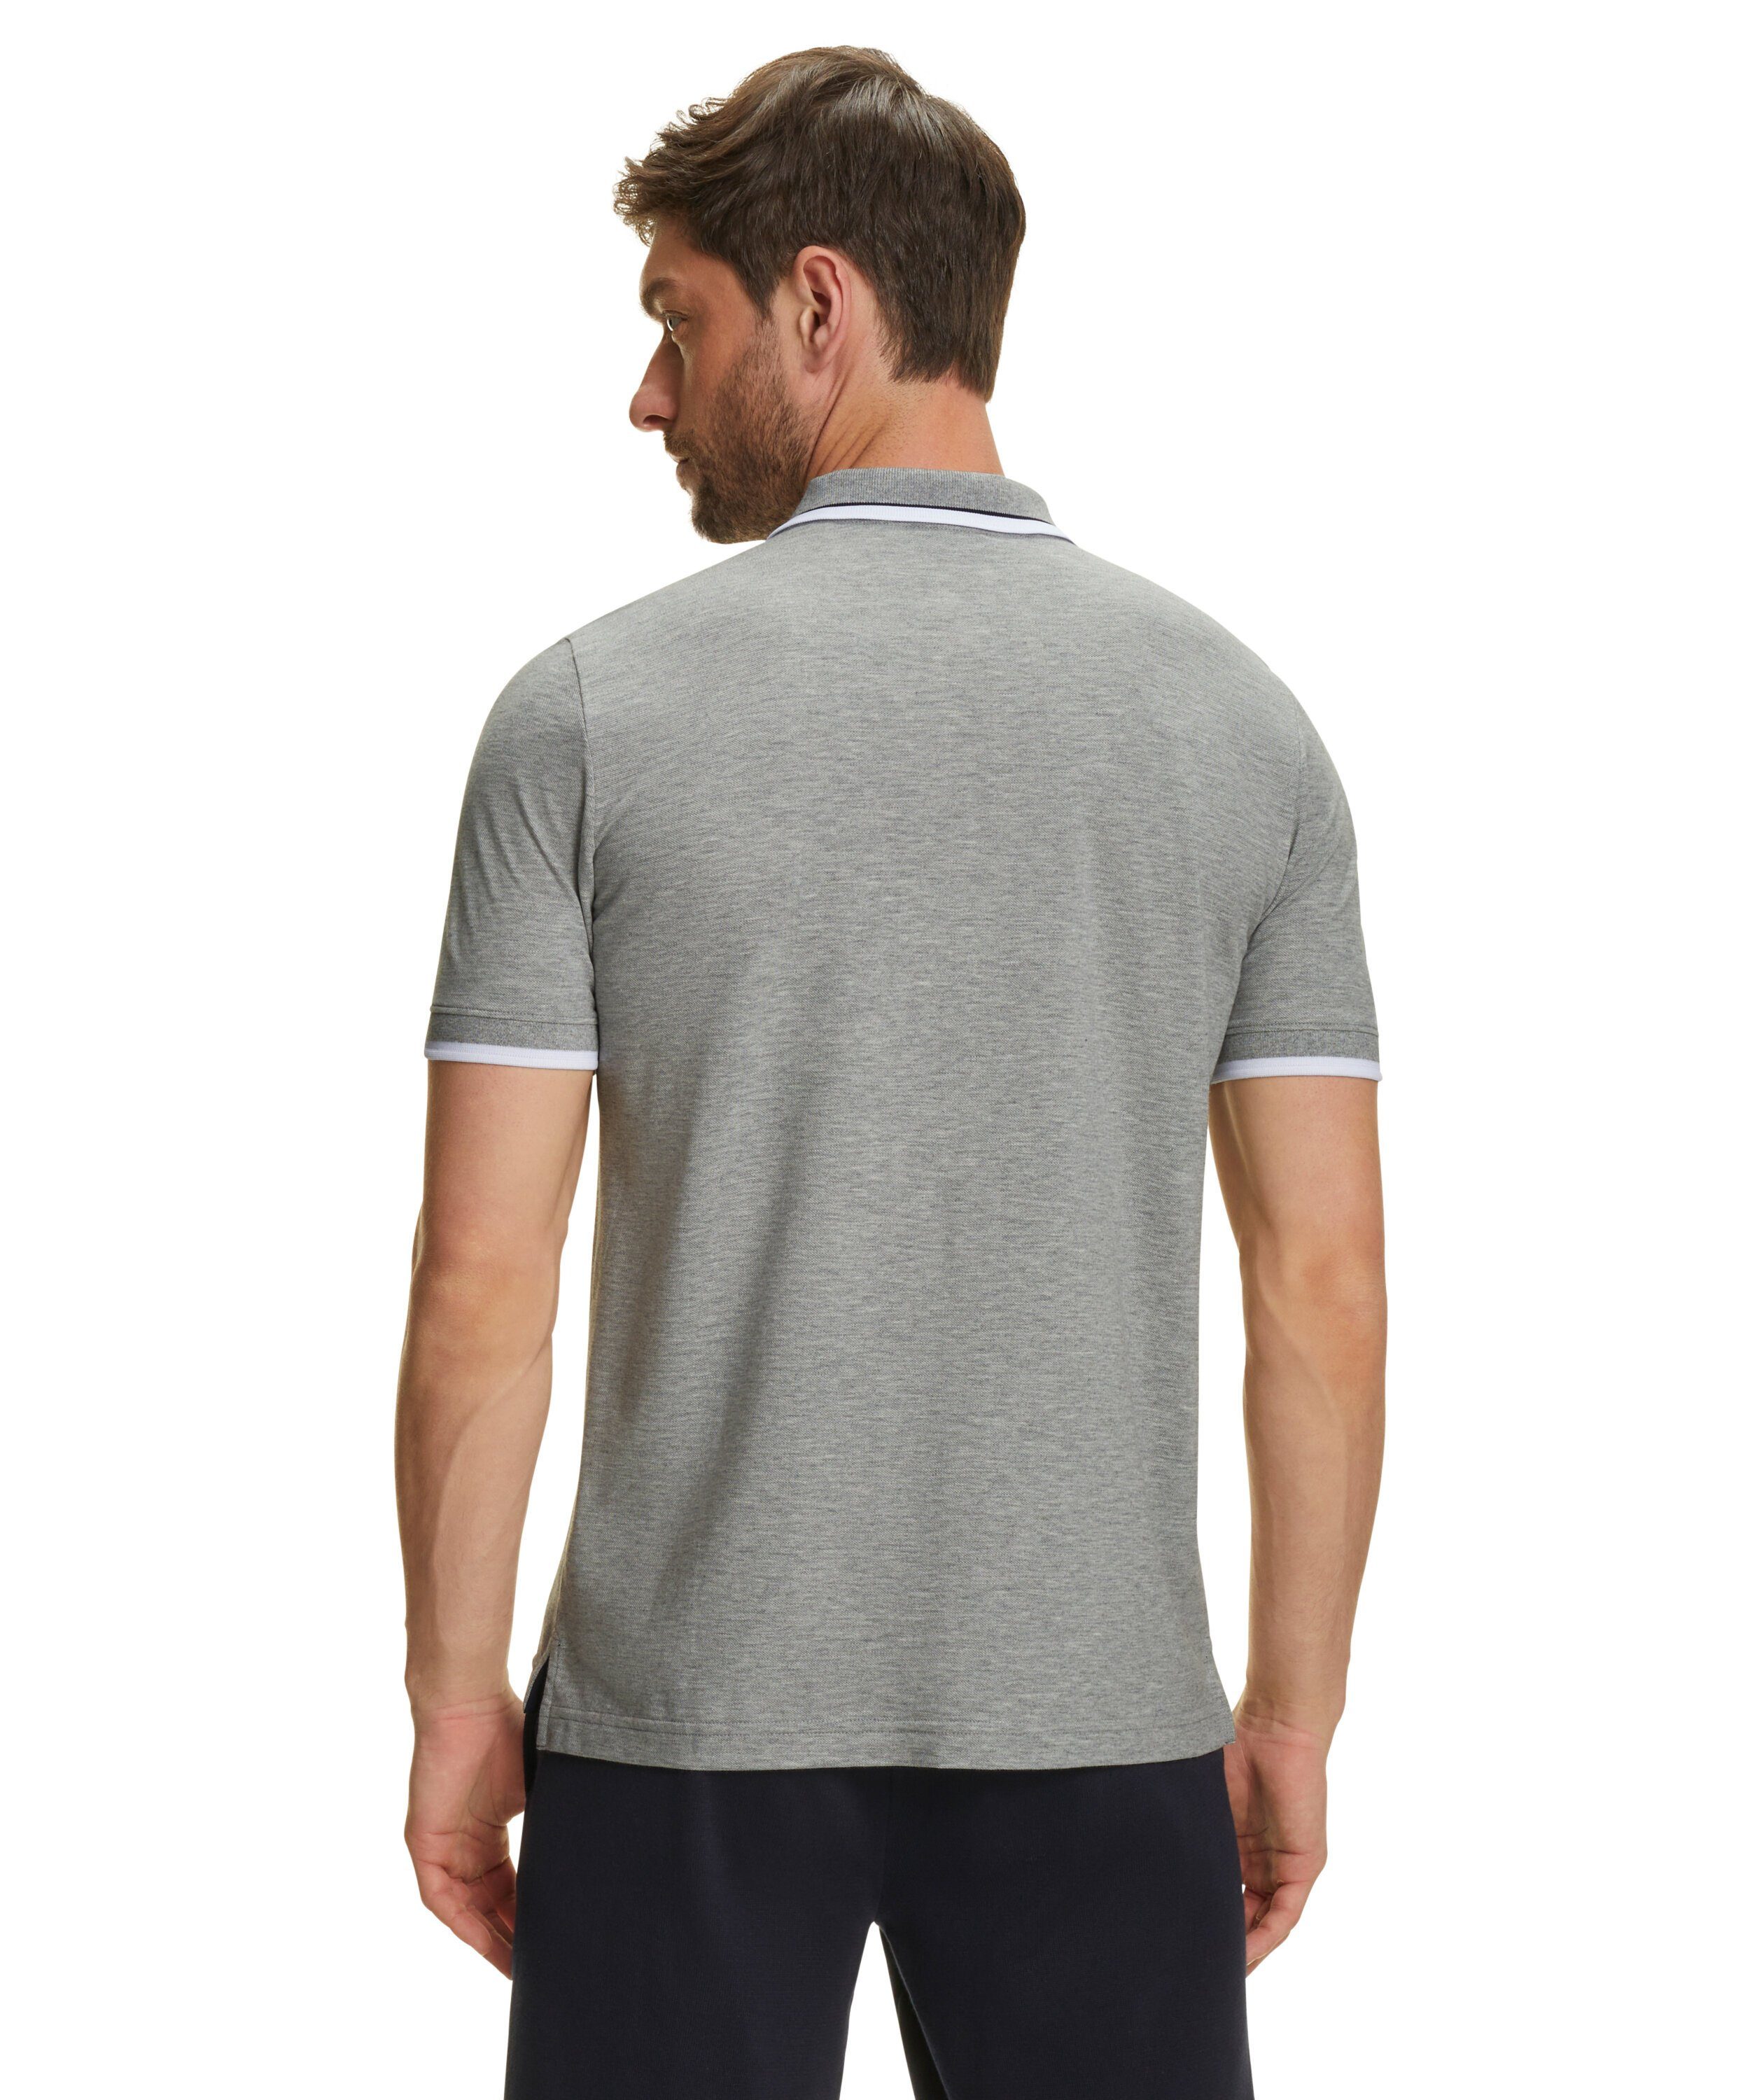 FALKE Poloshirt aus grey light Pima-Baumwolle hochwertiger (3400)